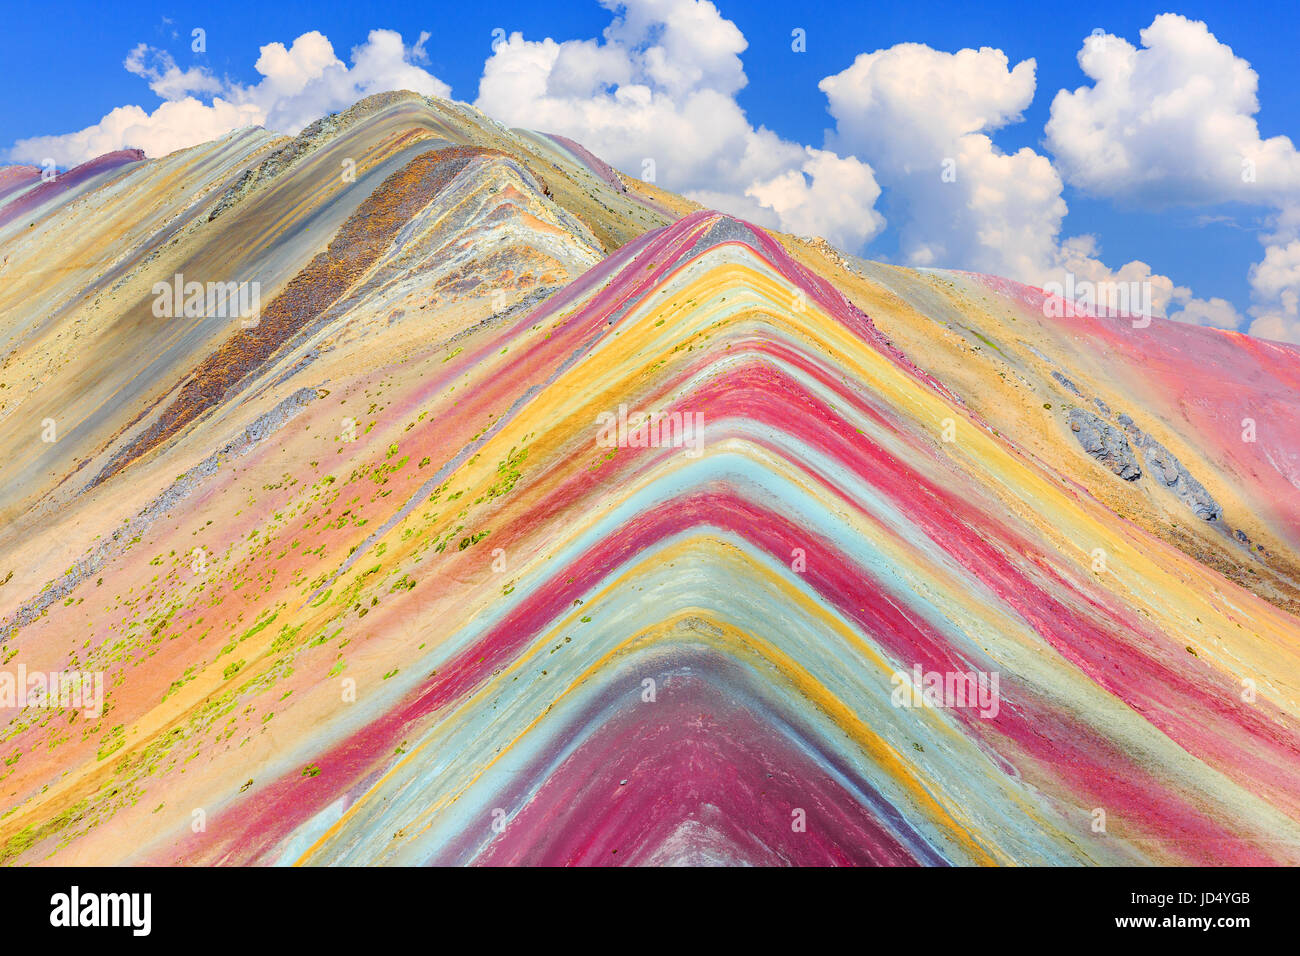 Vinicunca, Cusco Region, Peru. Montana de Siete Colores, or Rainbow Mountain. Stock Photo